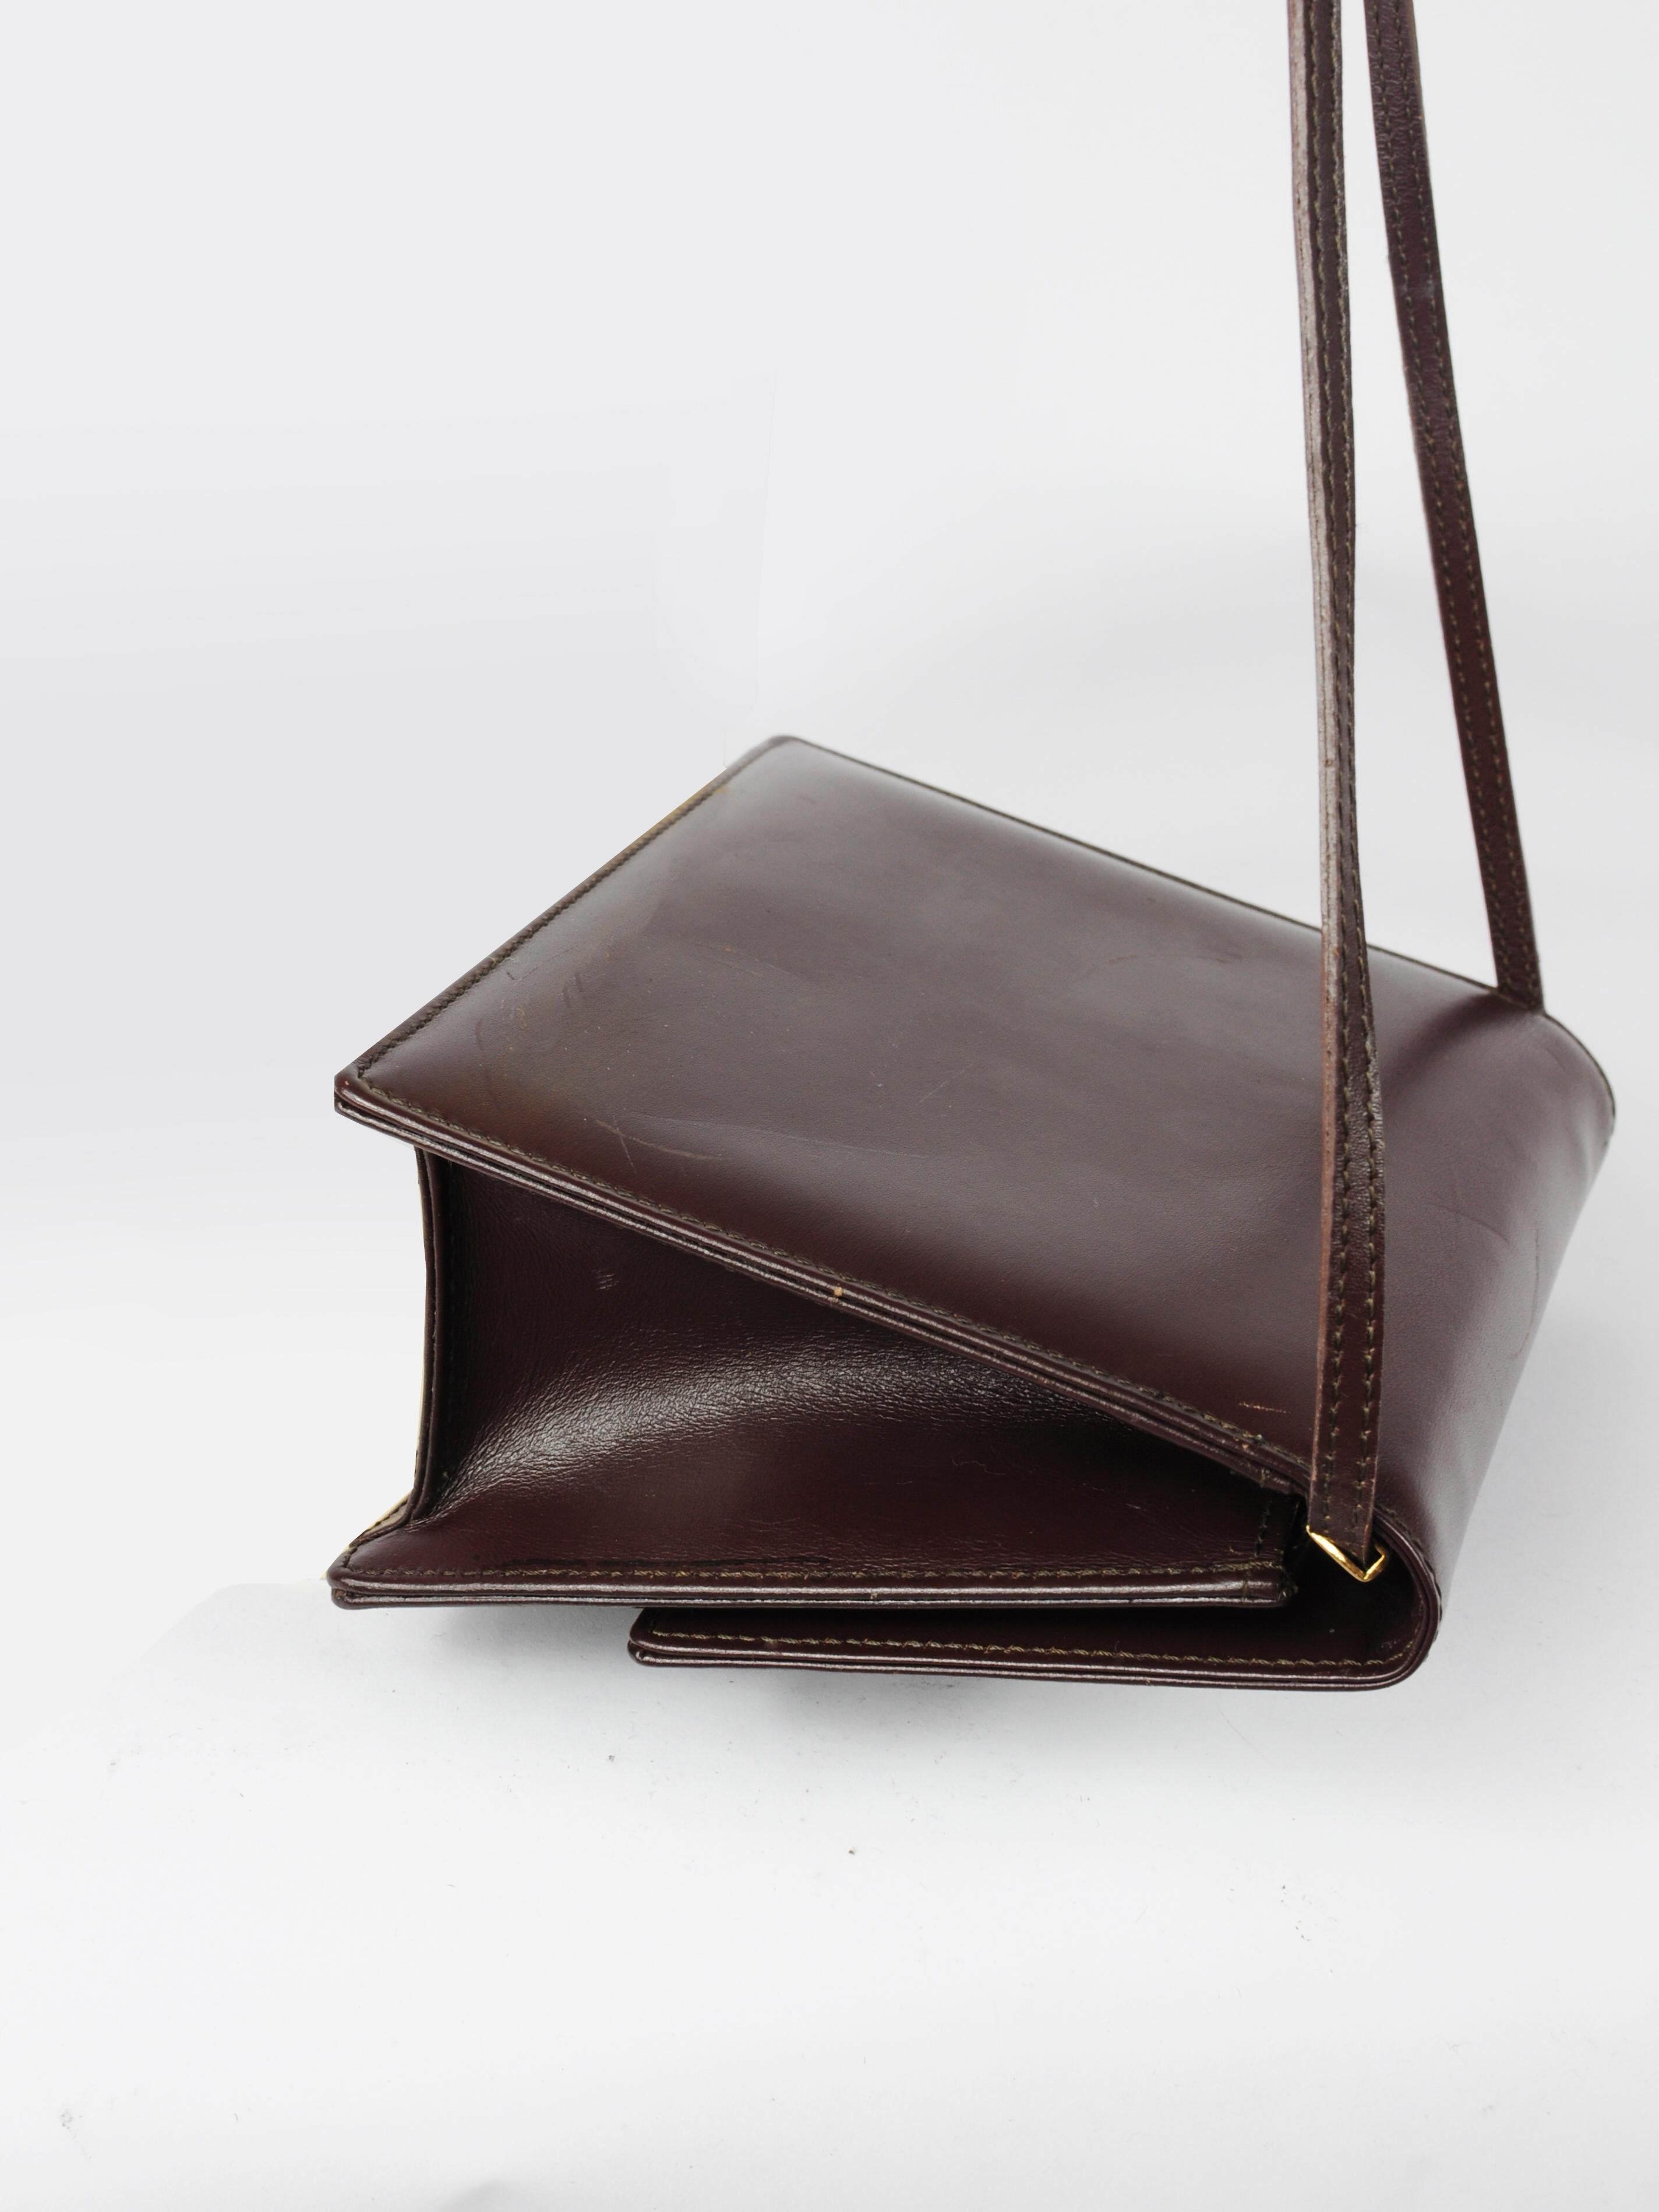 Gianni Versace Medusa Brown Leather Crossbody Mini Bag 1990s For Sale 5